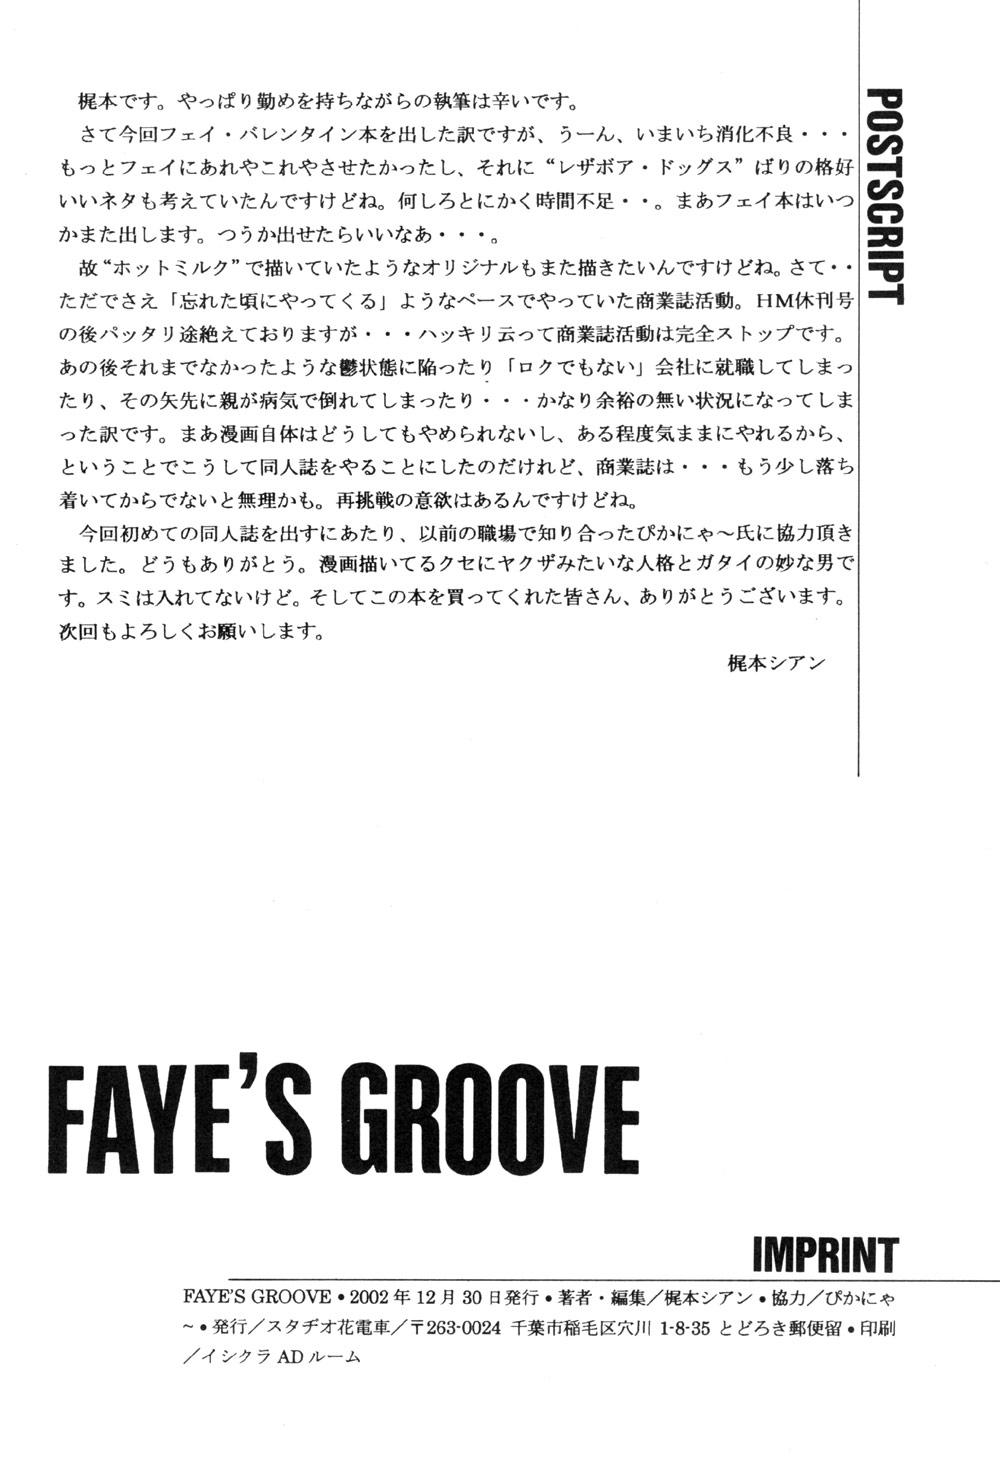 Faye's Groove 27